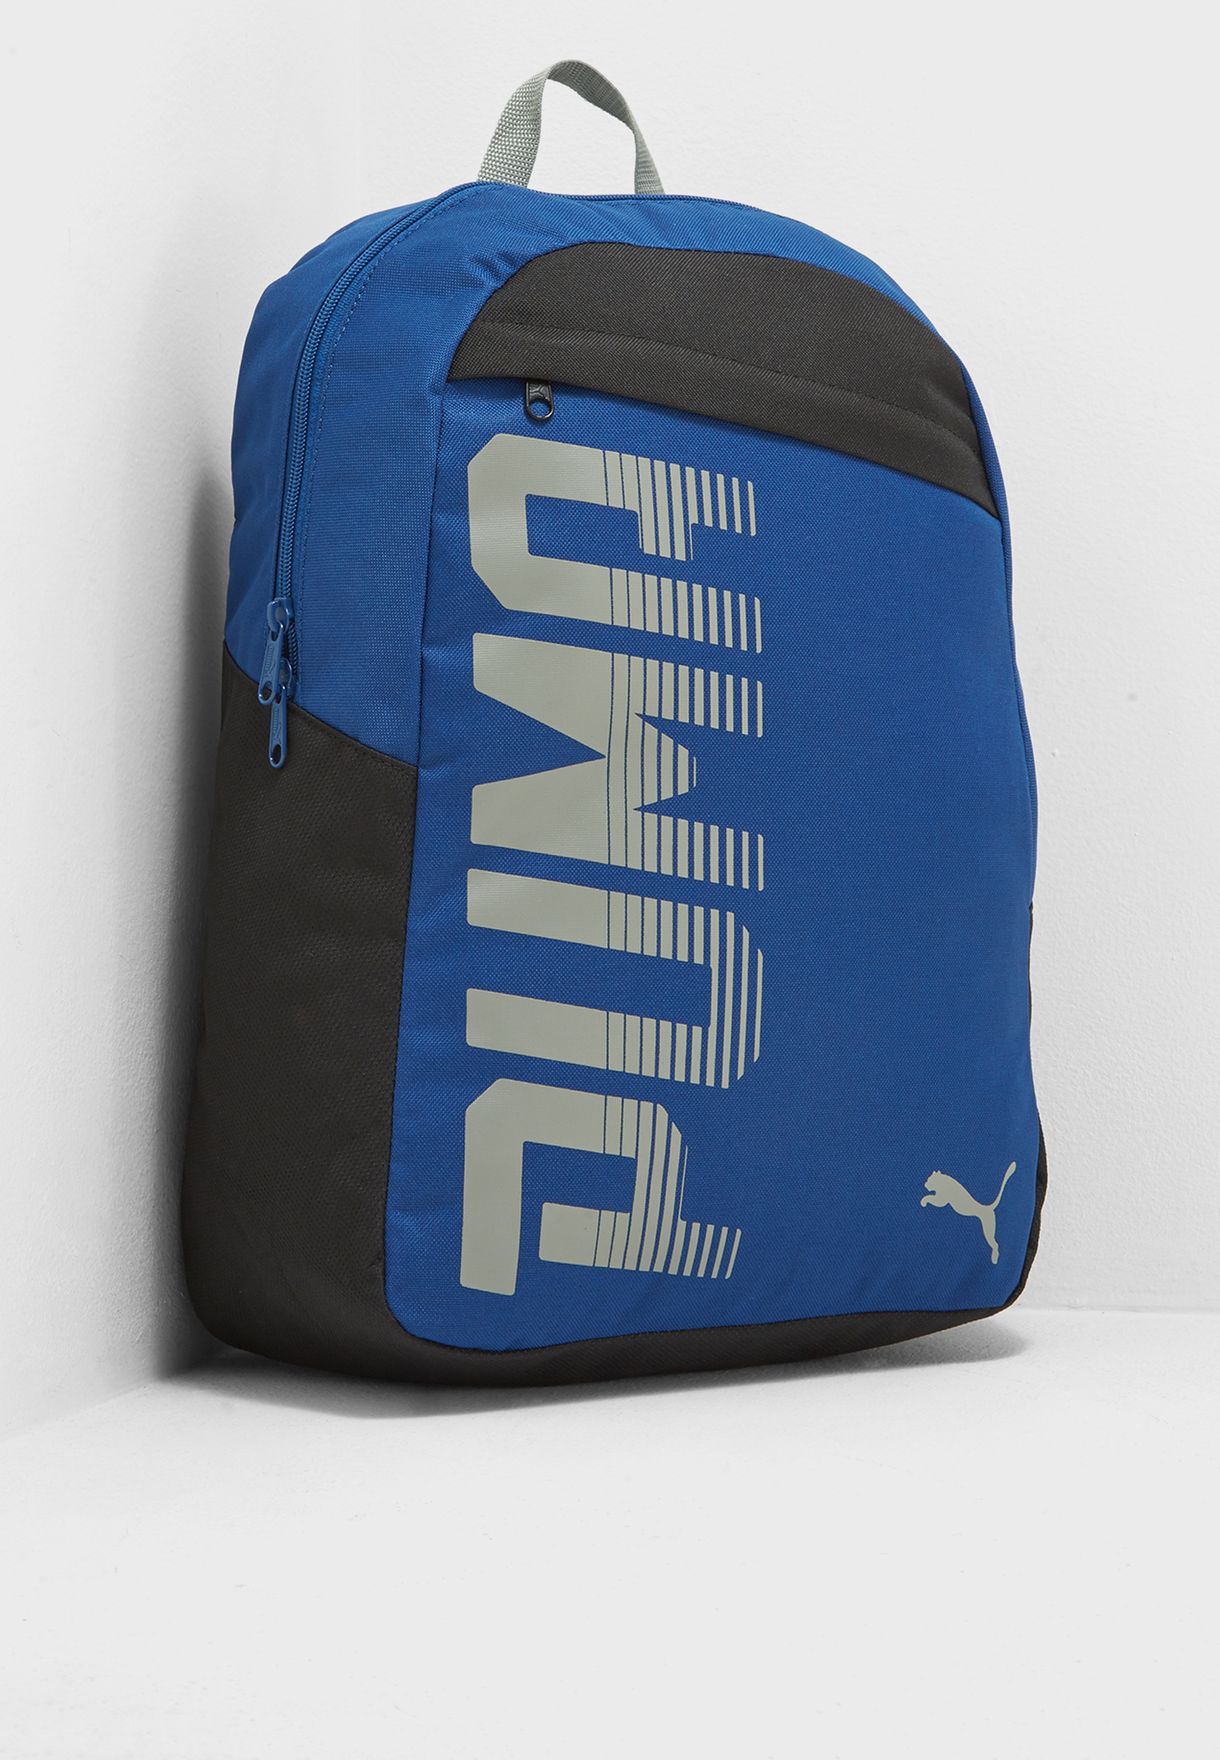 puma new pioneer backpack